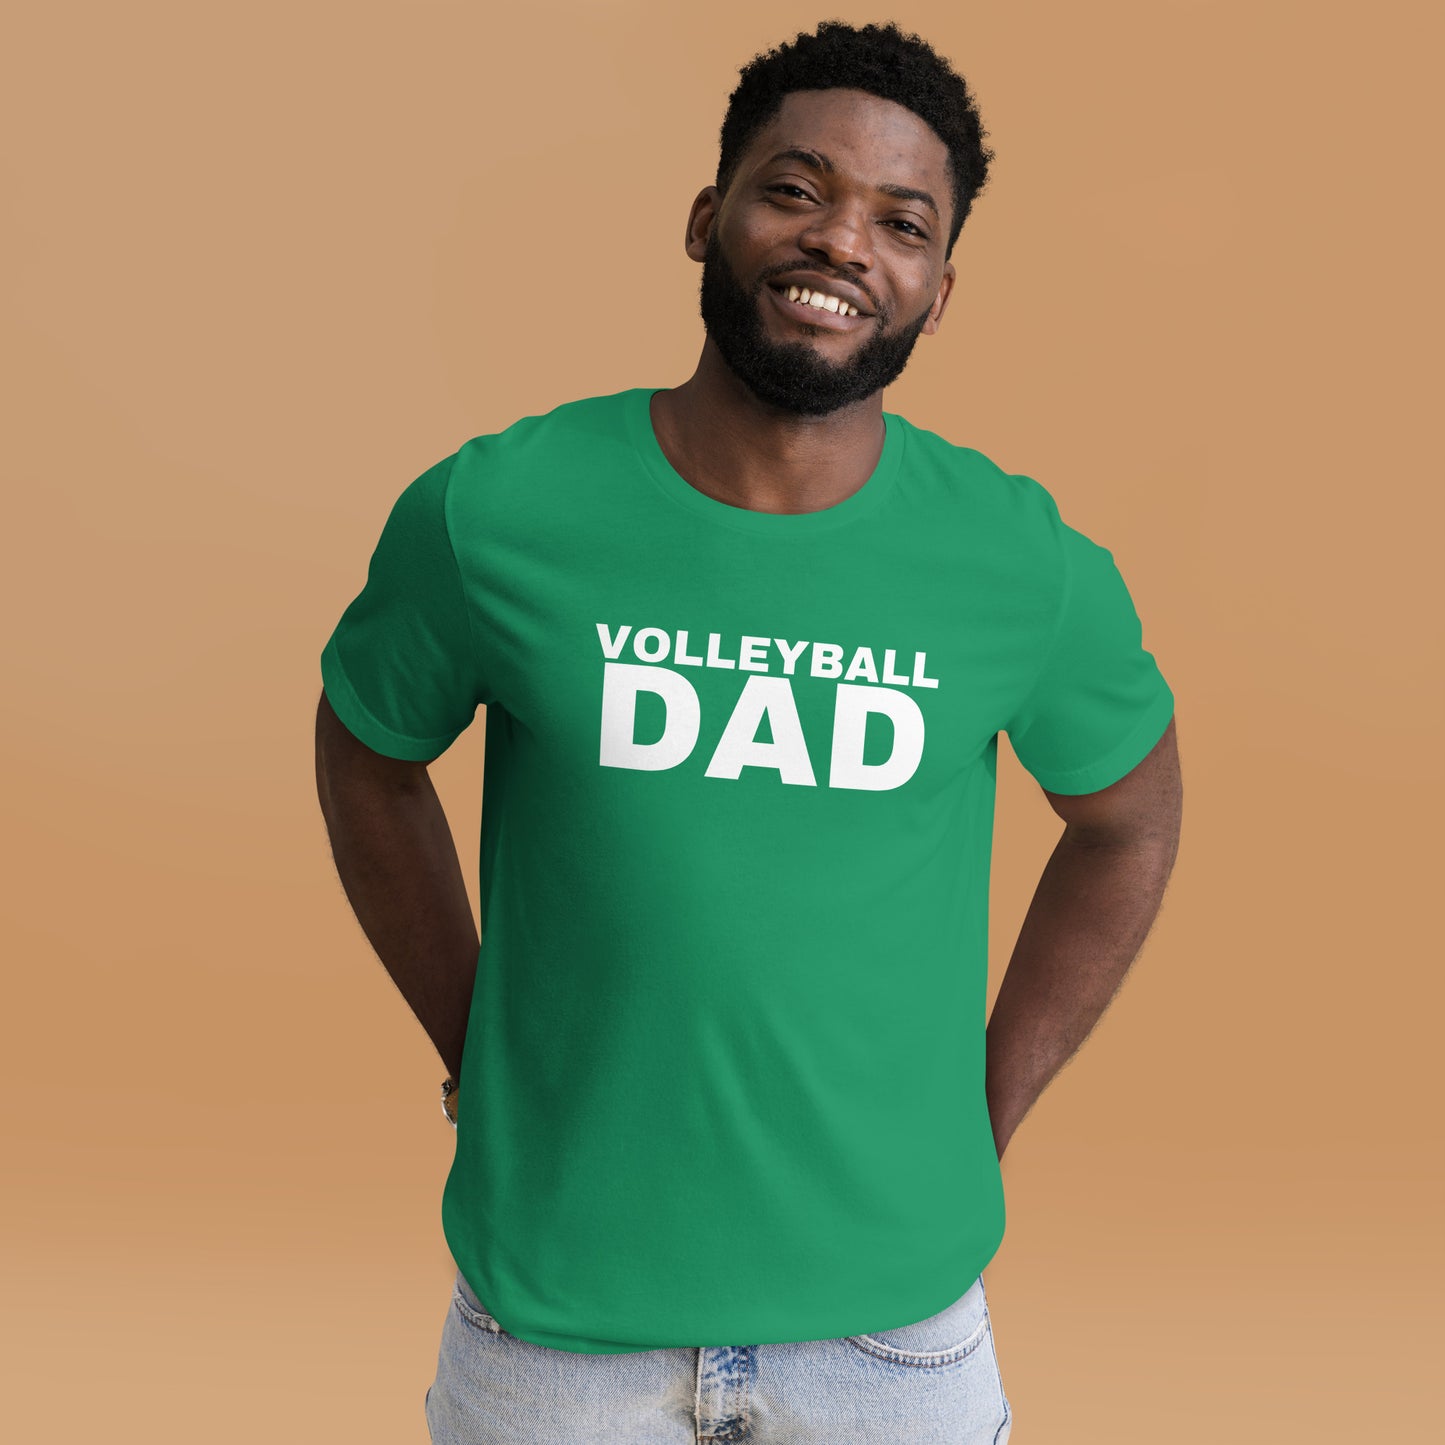 Volleyball Dad - Unisex t-shirt